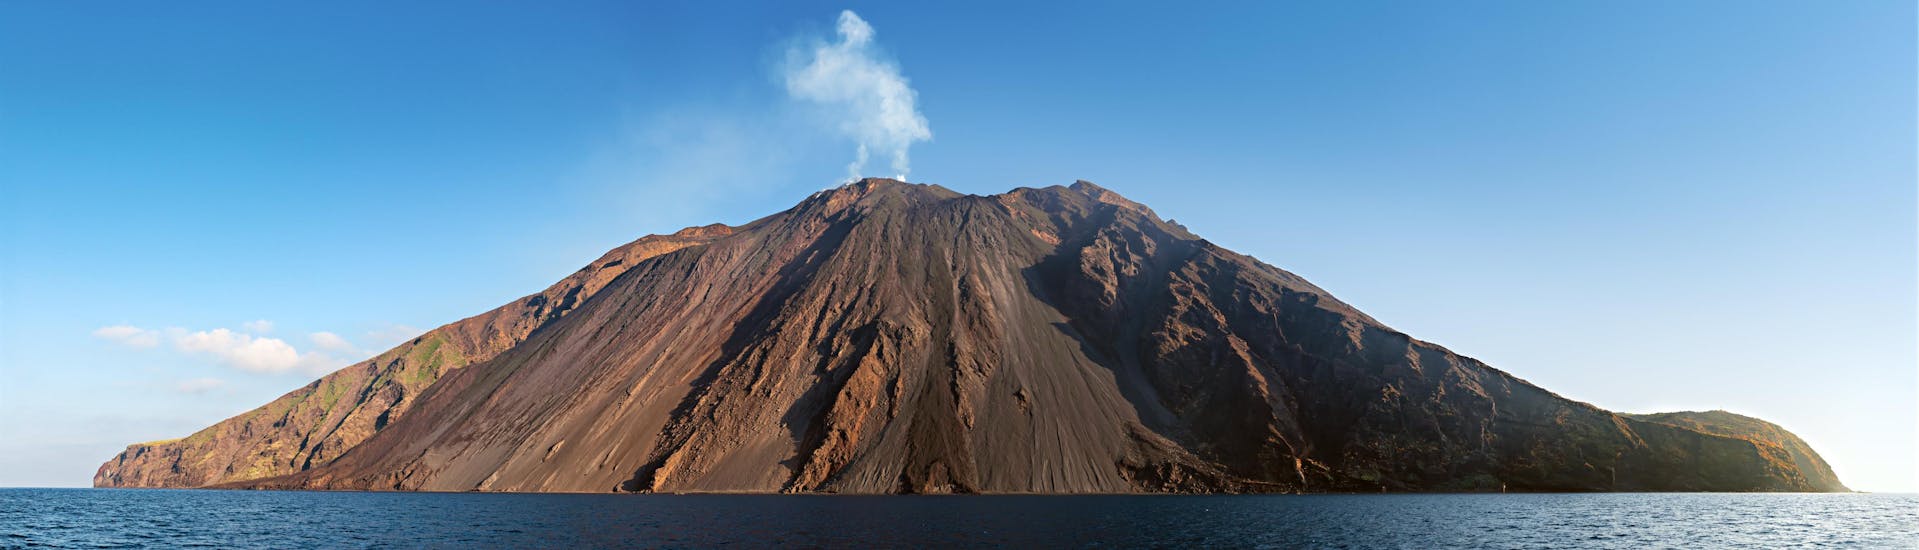 Picture of the Stromboli volcano, a popular touristic sight in Sicily.